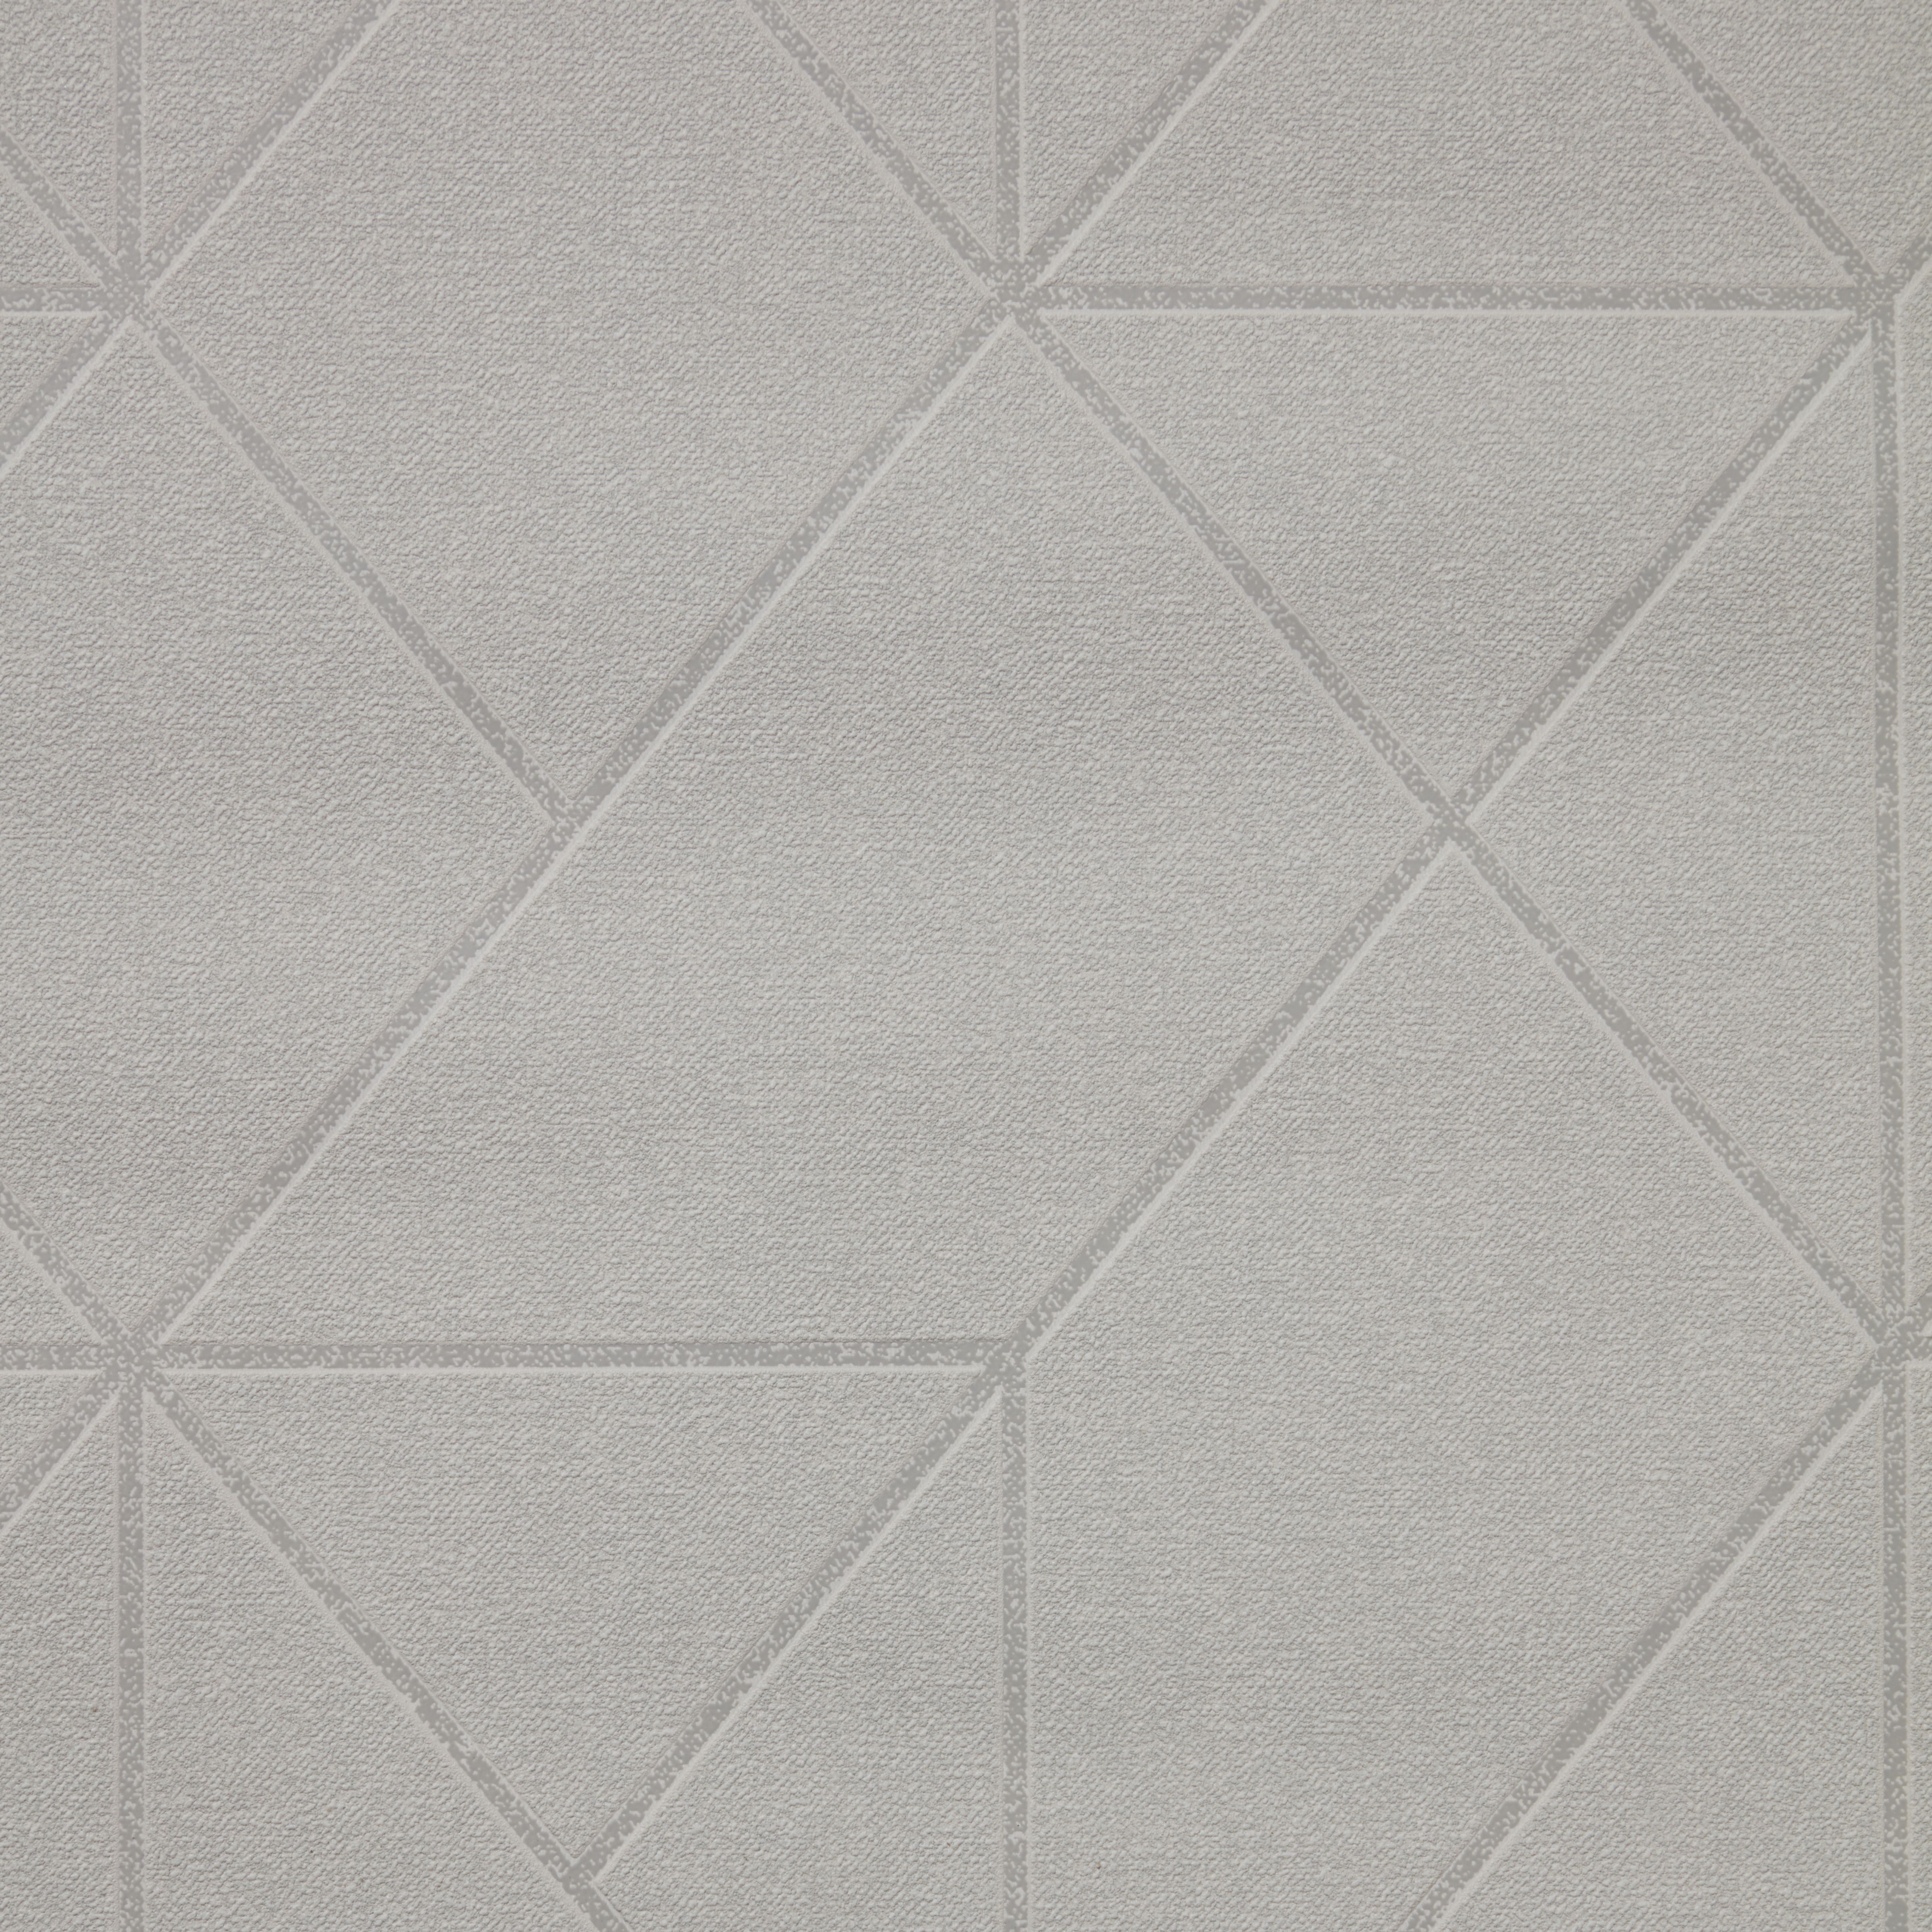 GoodHome Patula Taupe Ridged effect Geometric Textured Wallpaper Sample